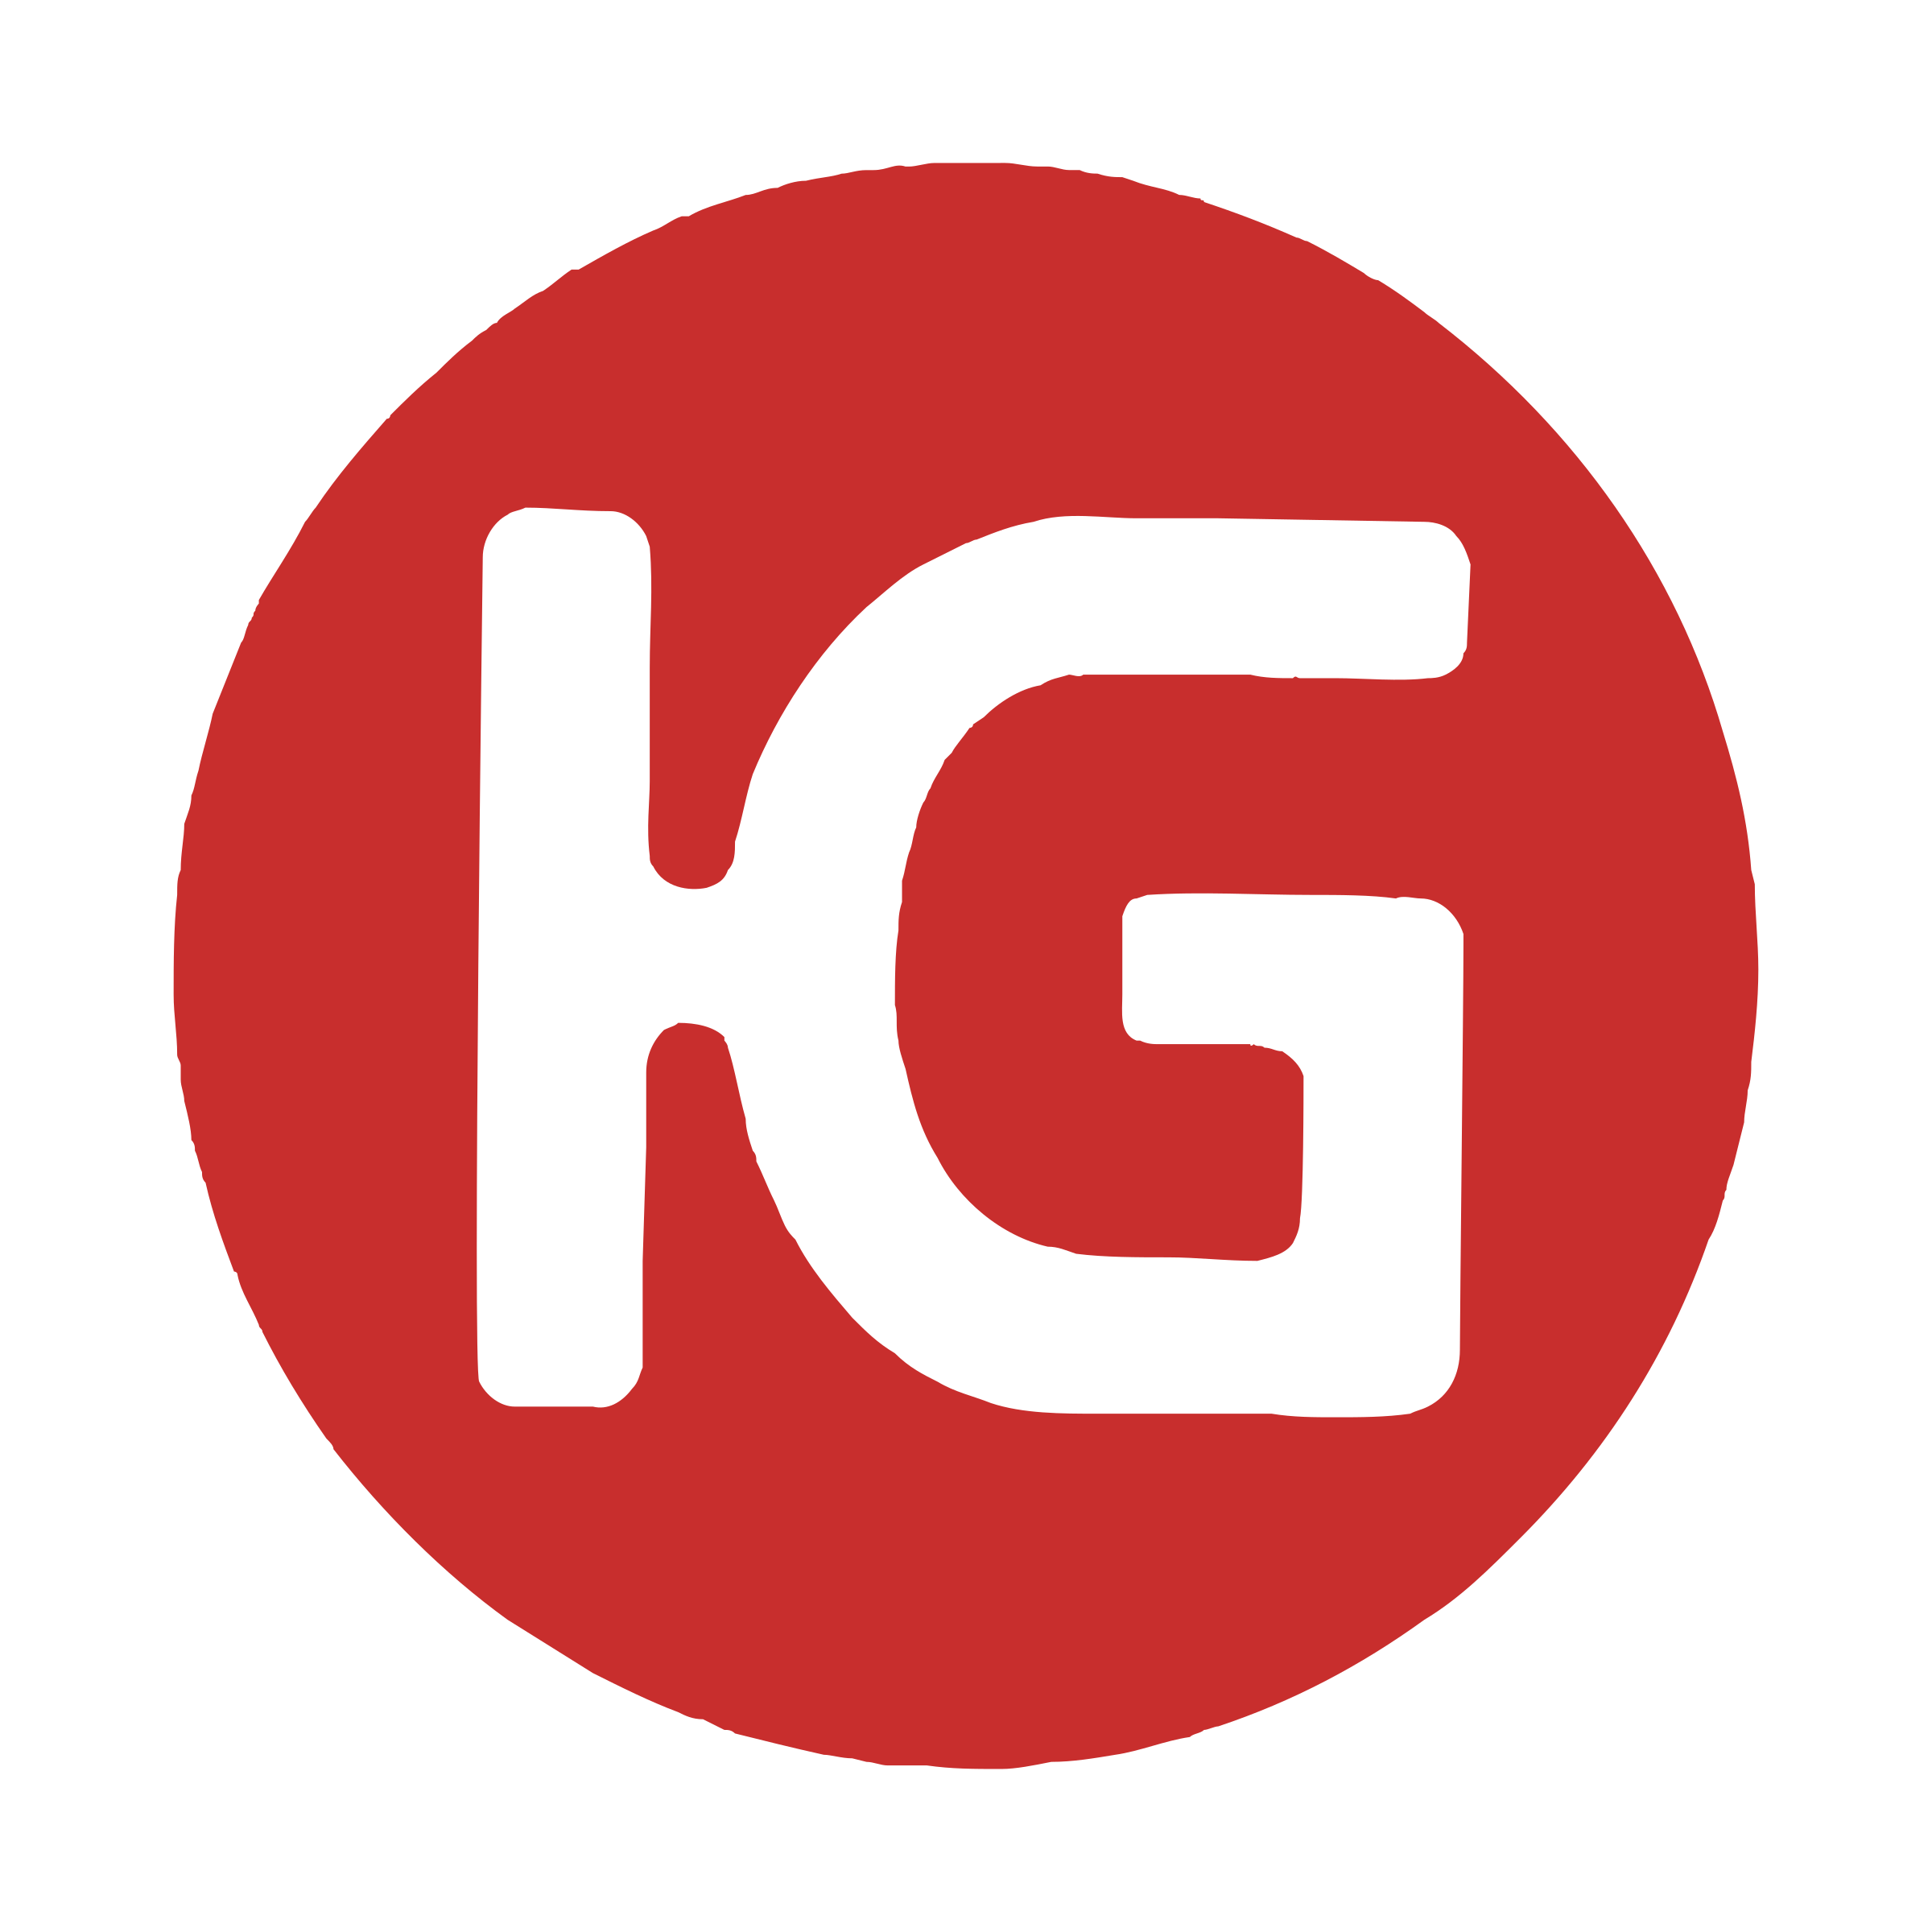 Instagram IG Logotipo Free PNG Image